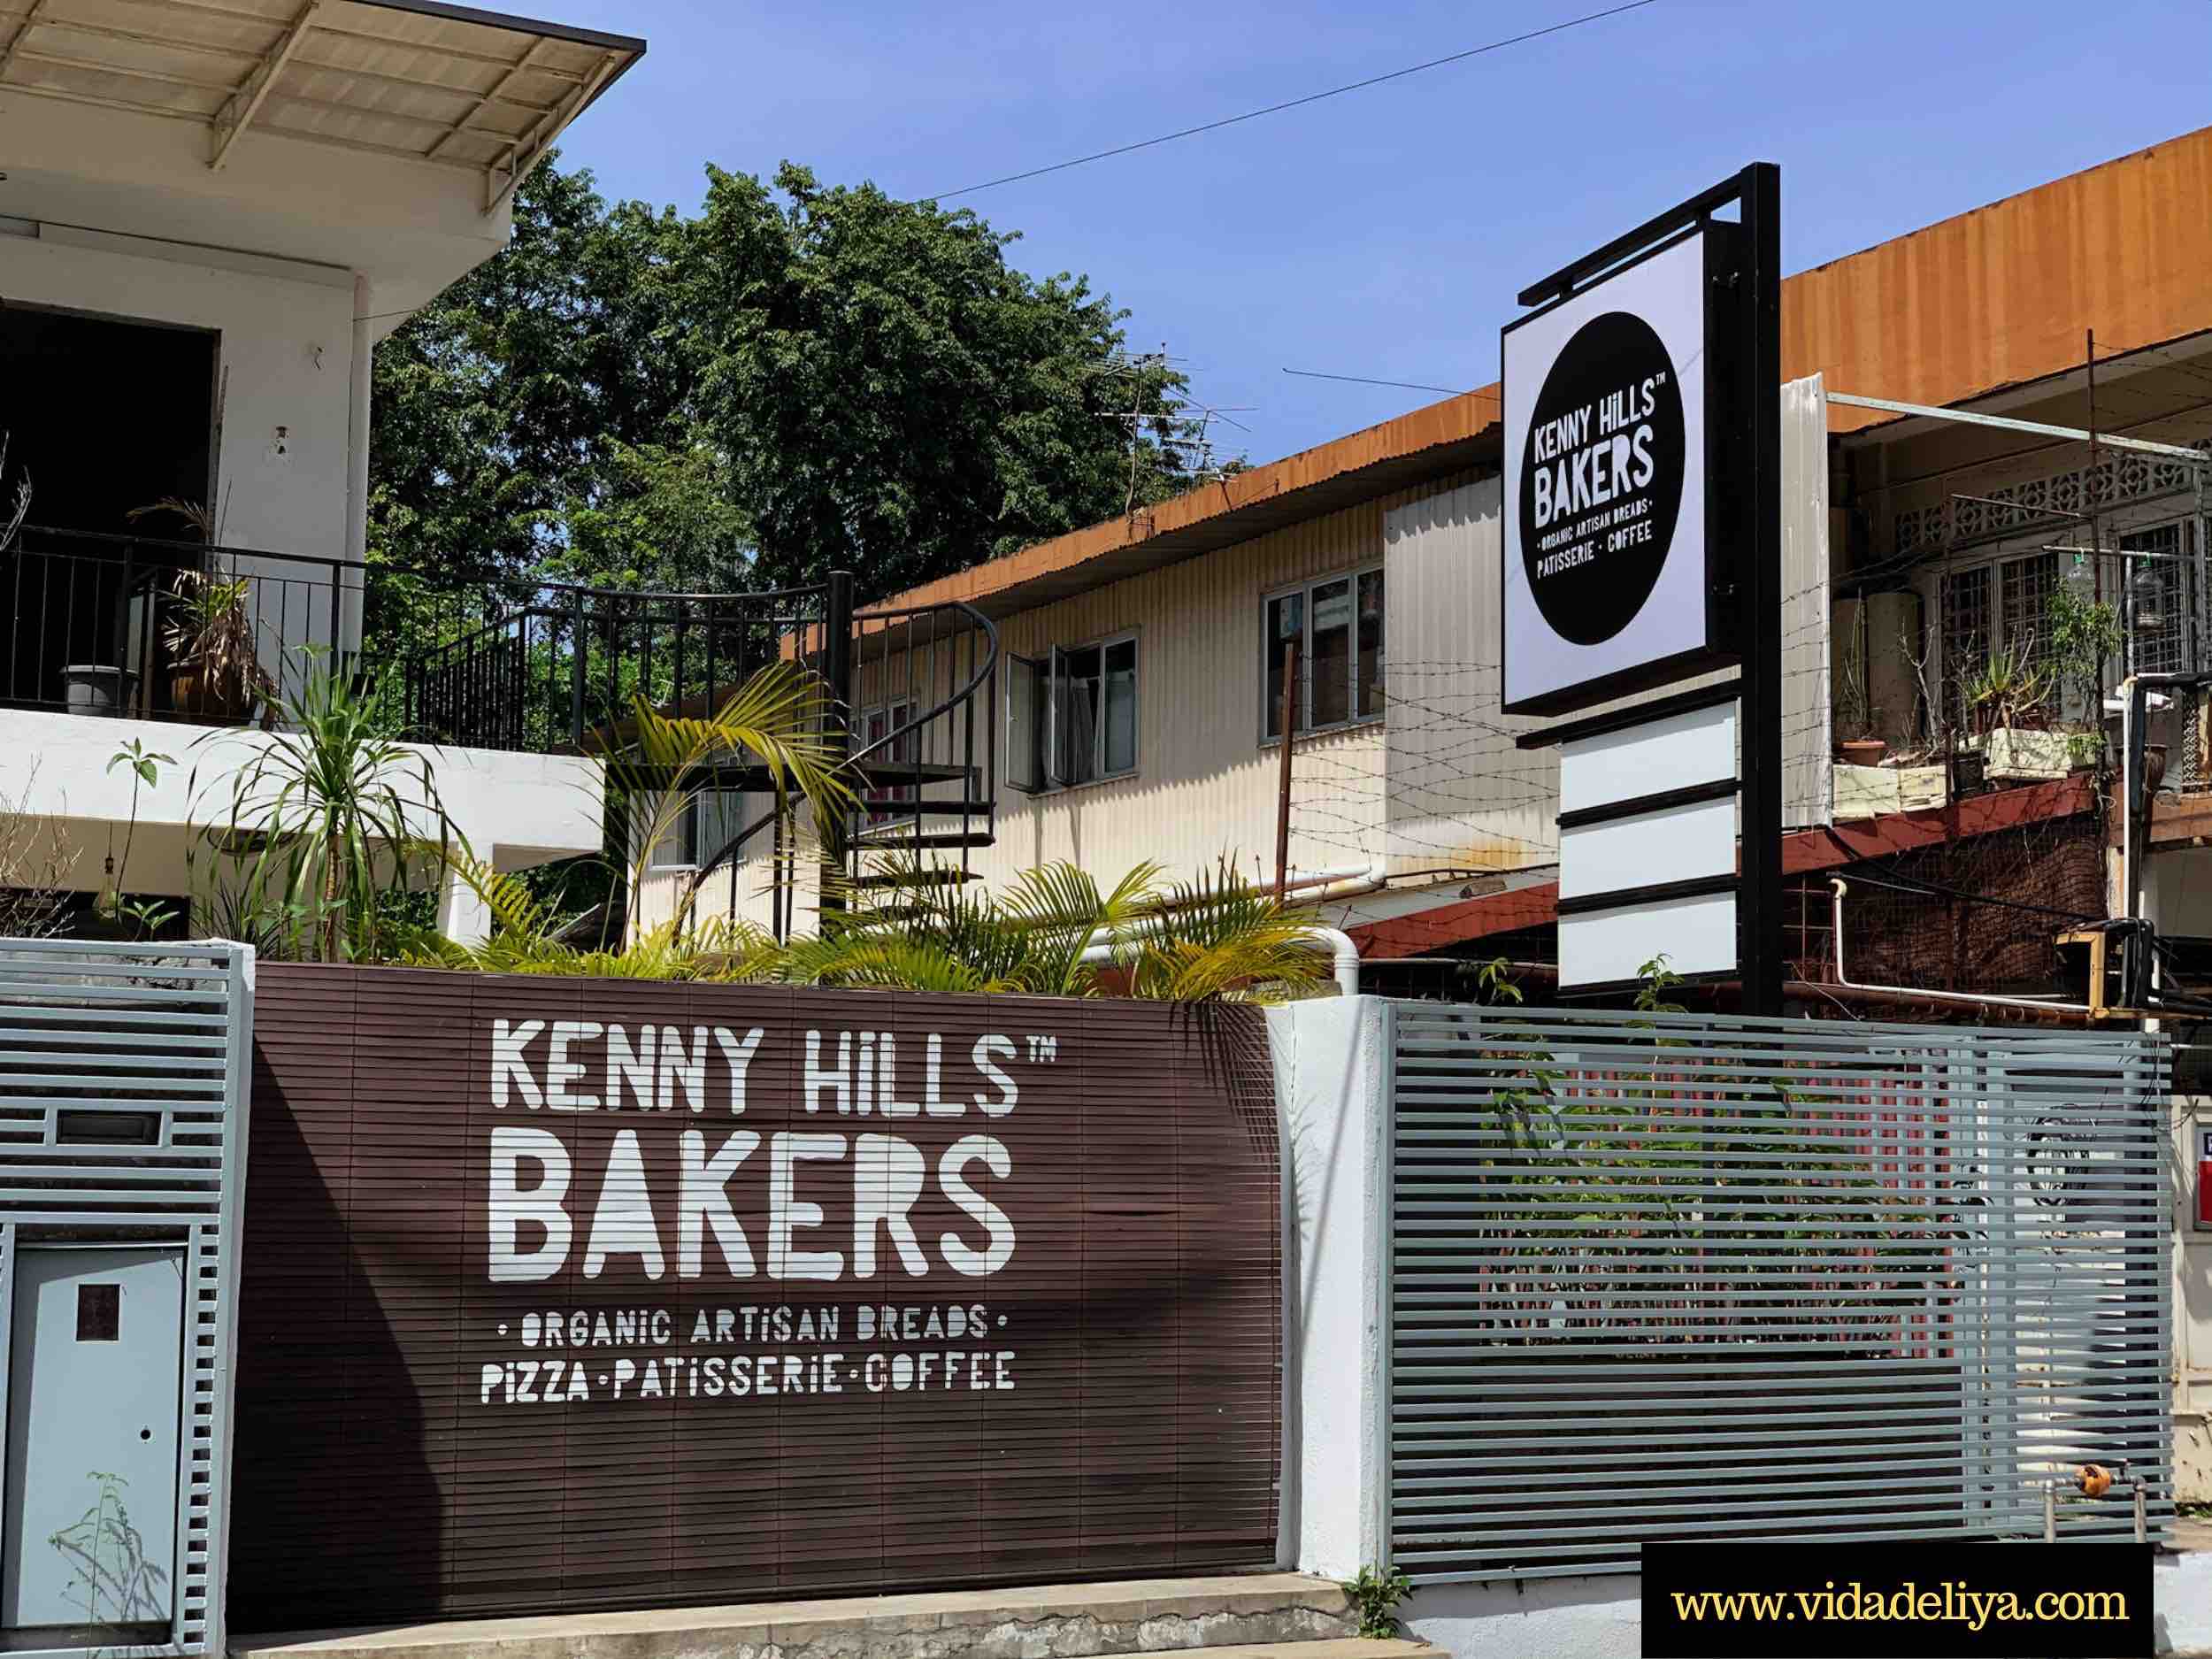 Bakers parkcity hills kenny desa KENNY HILLS